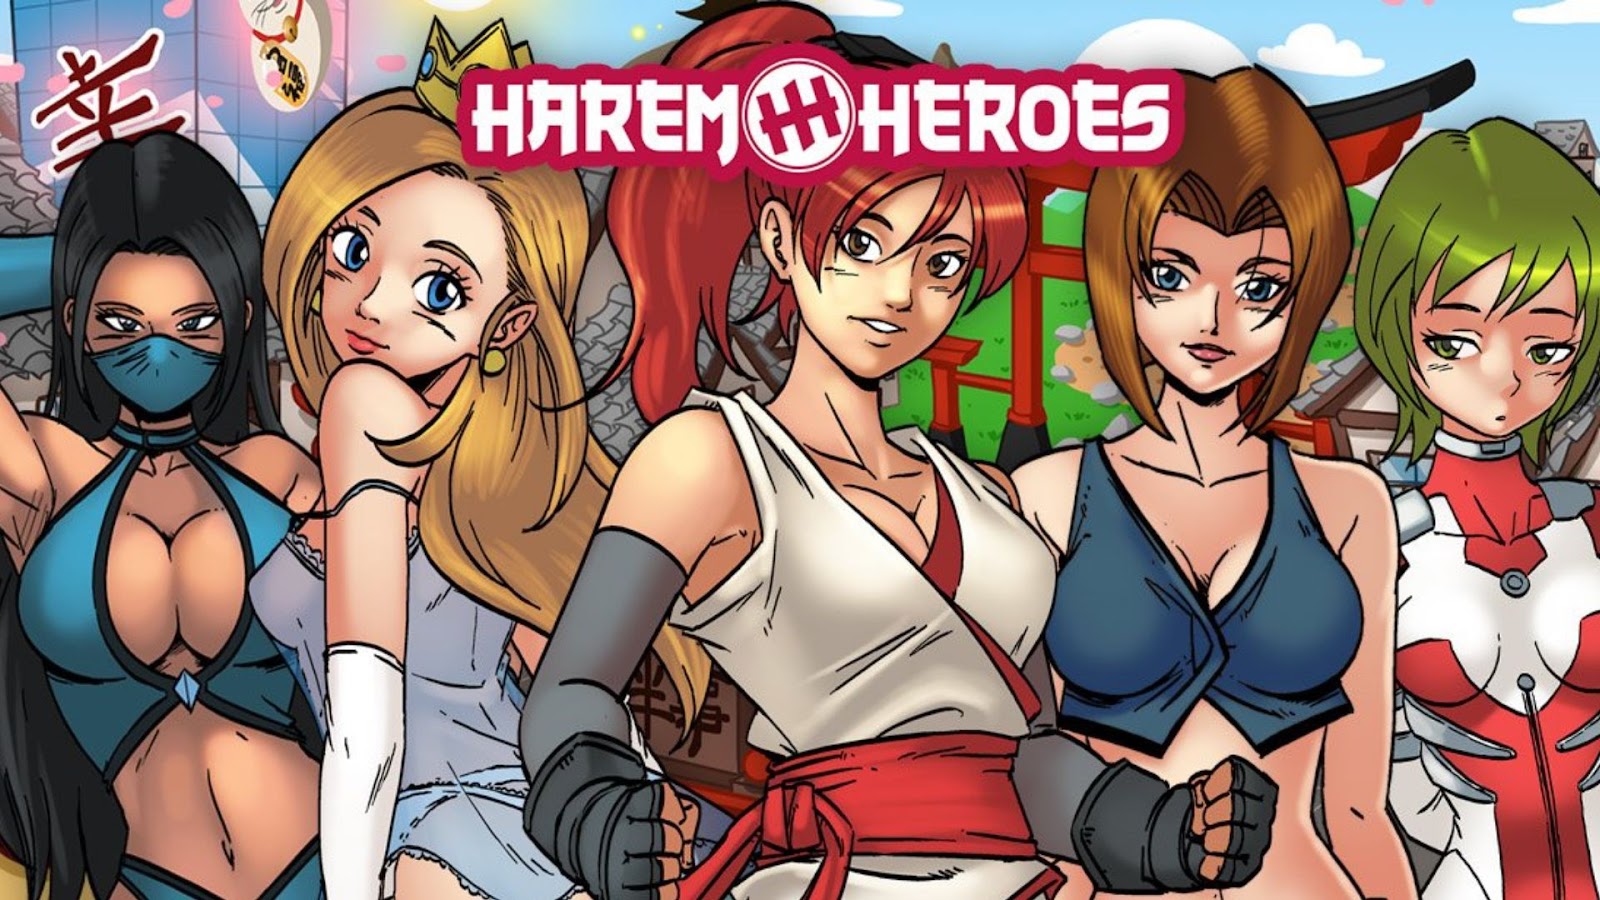 Harem Heroes